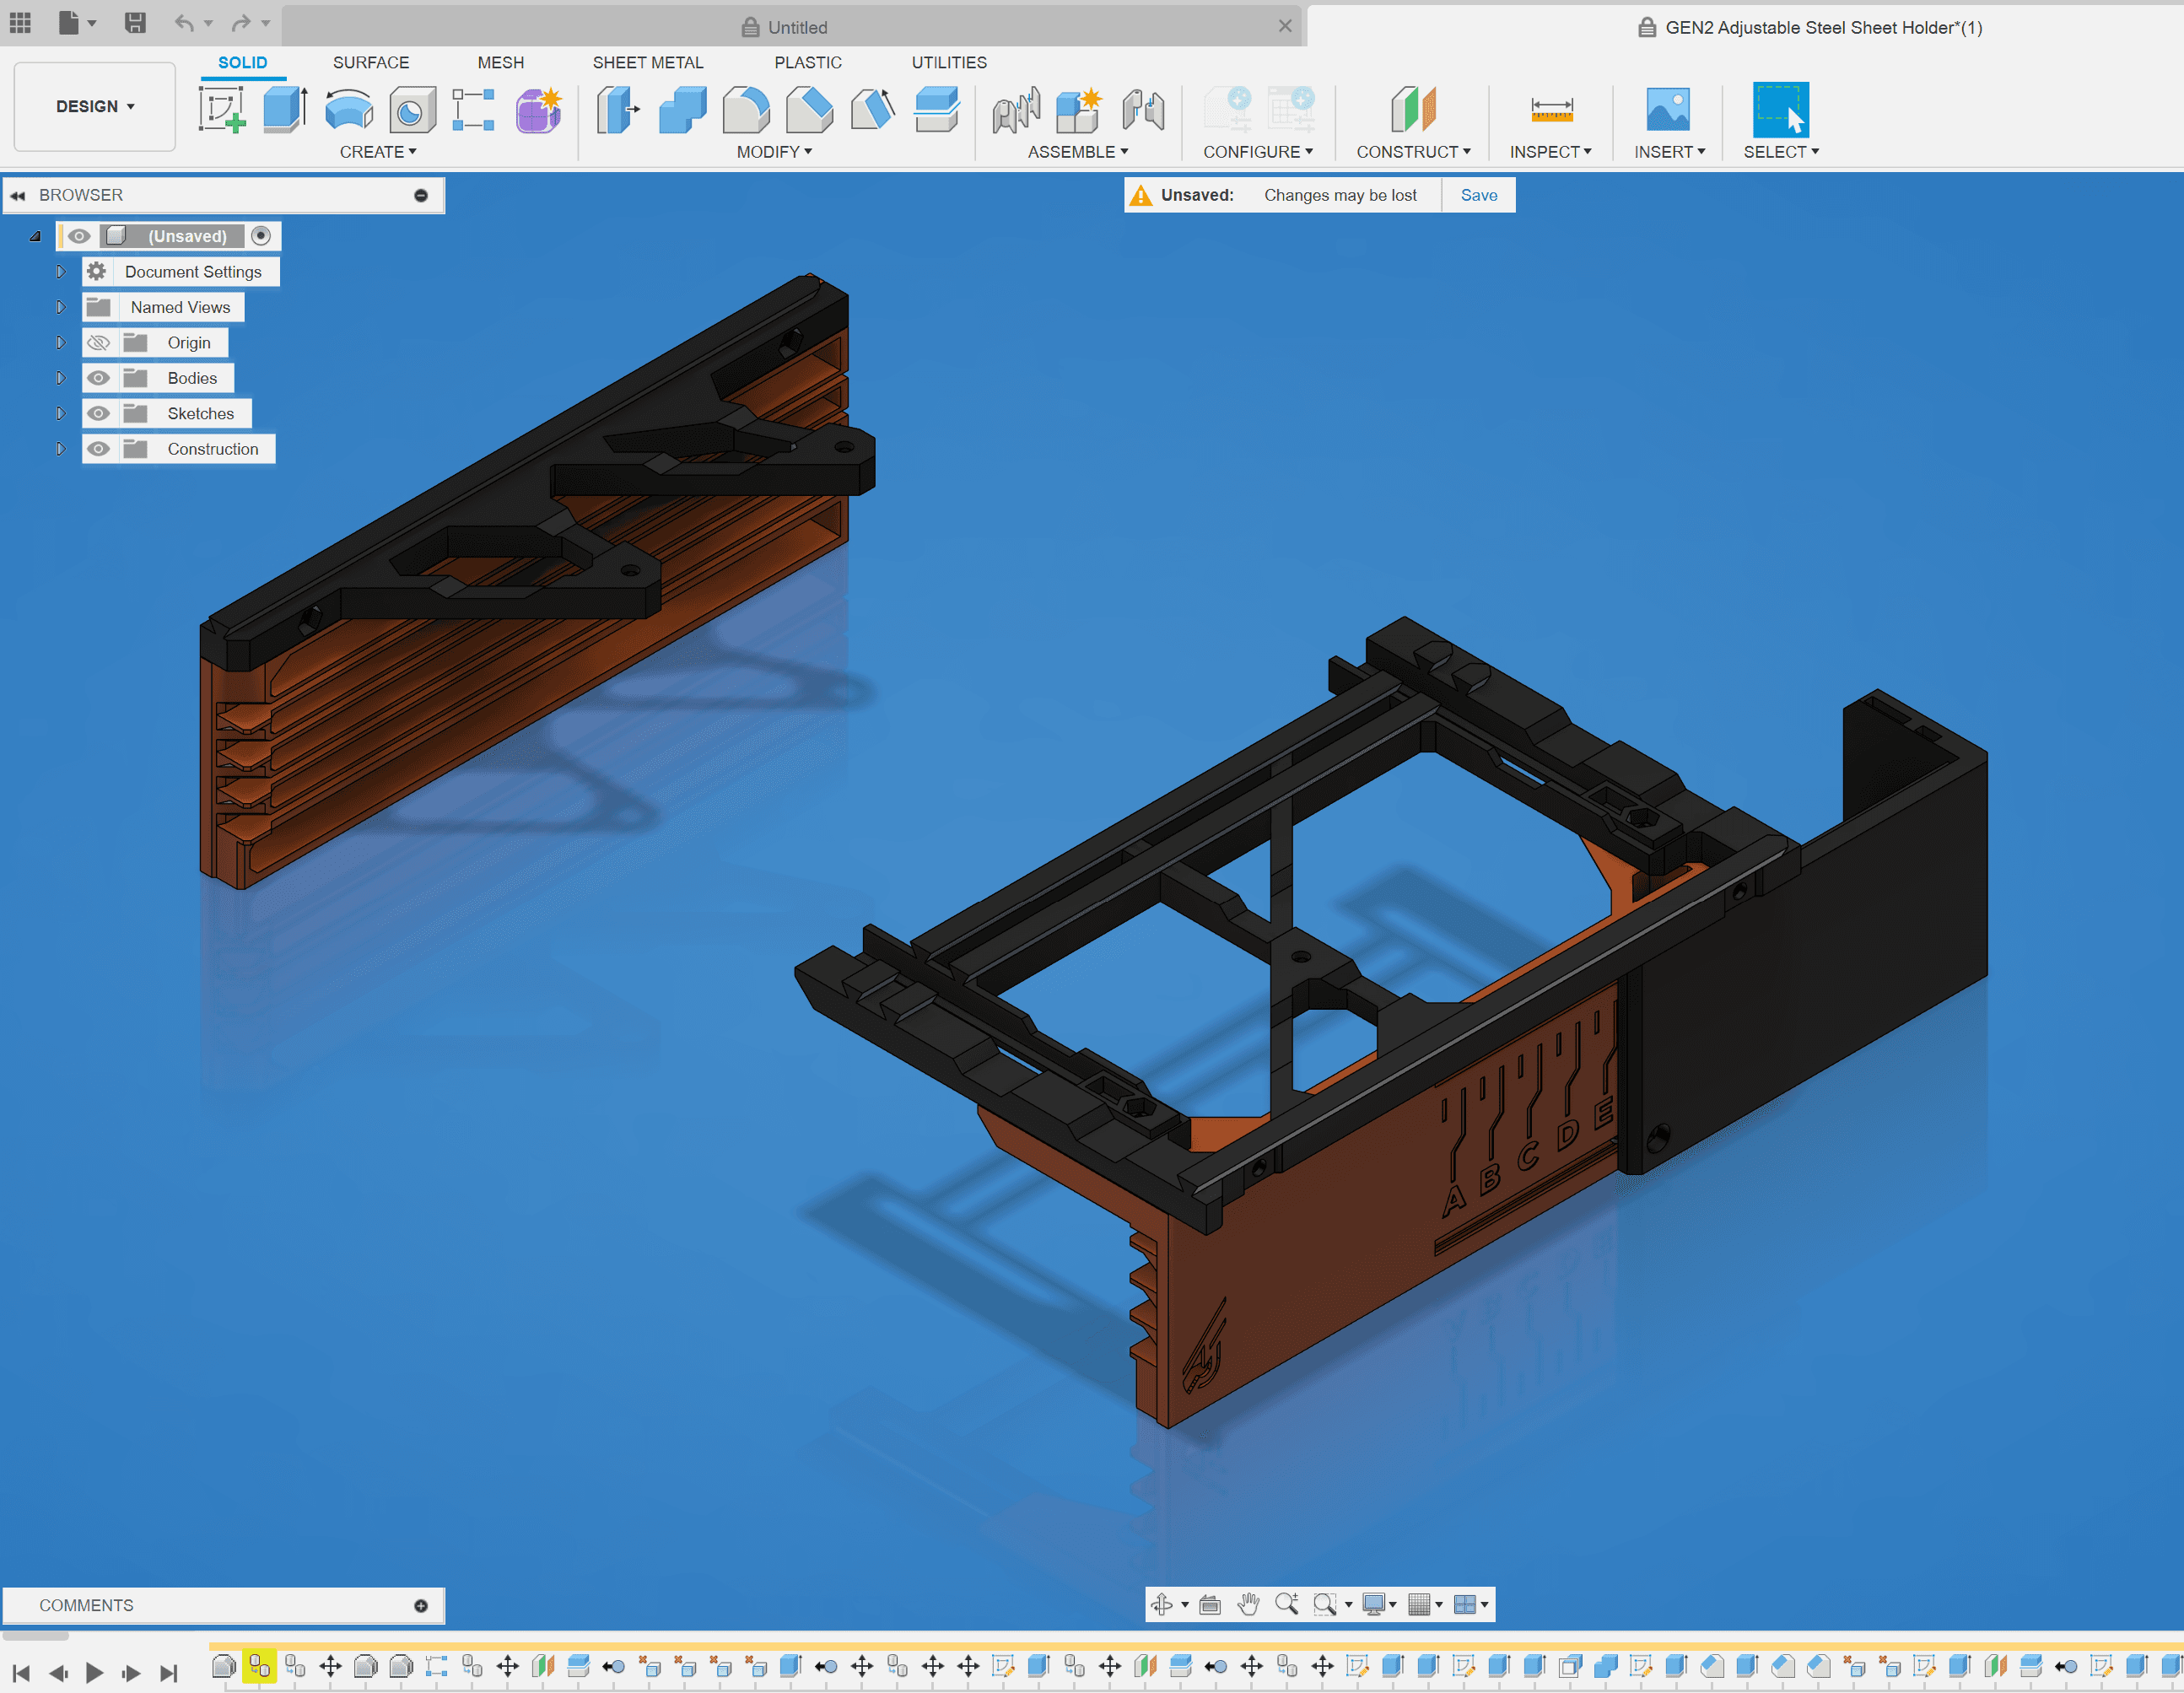 GEN2 Steel Sheet Holder CAD Files 3d model